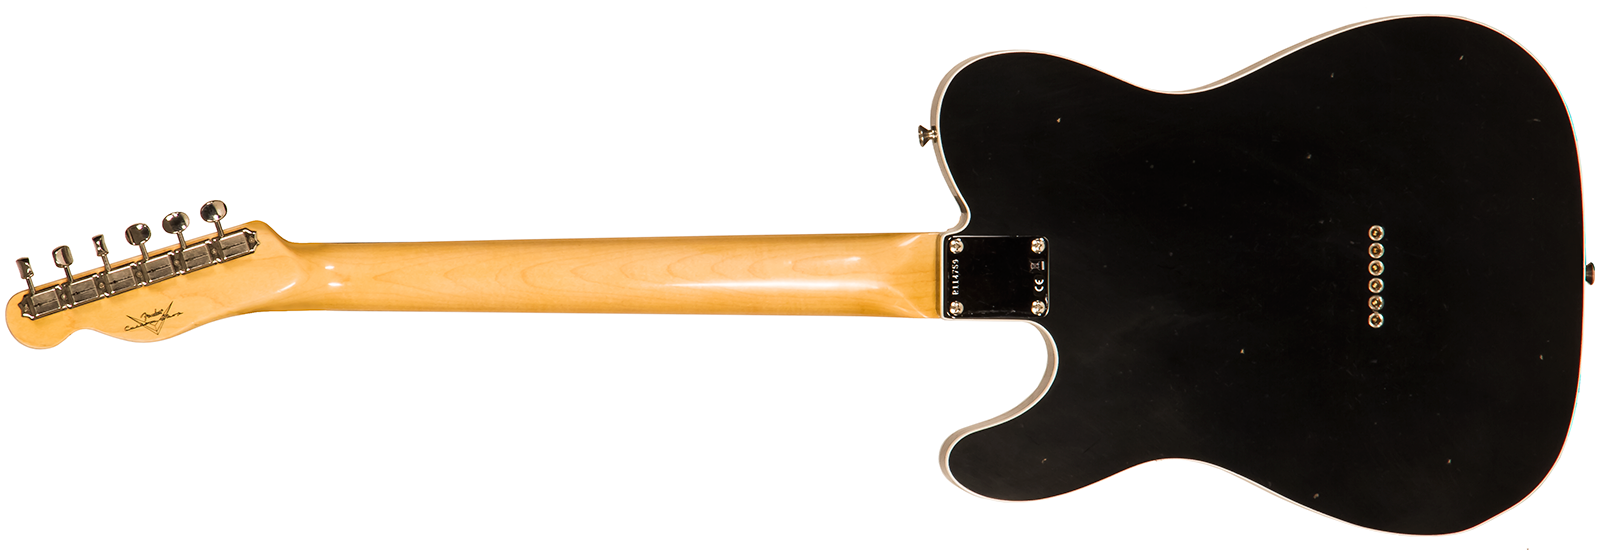 Fender Custom Shop Tele 1960 2s Ht Rw #r114759 - Journeyman Relic Black - Tel shape electric guitar - Variation 1